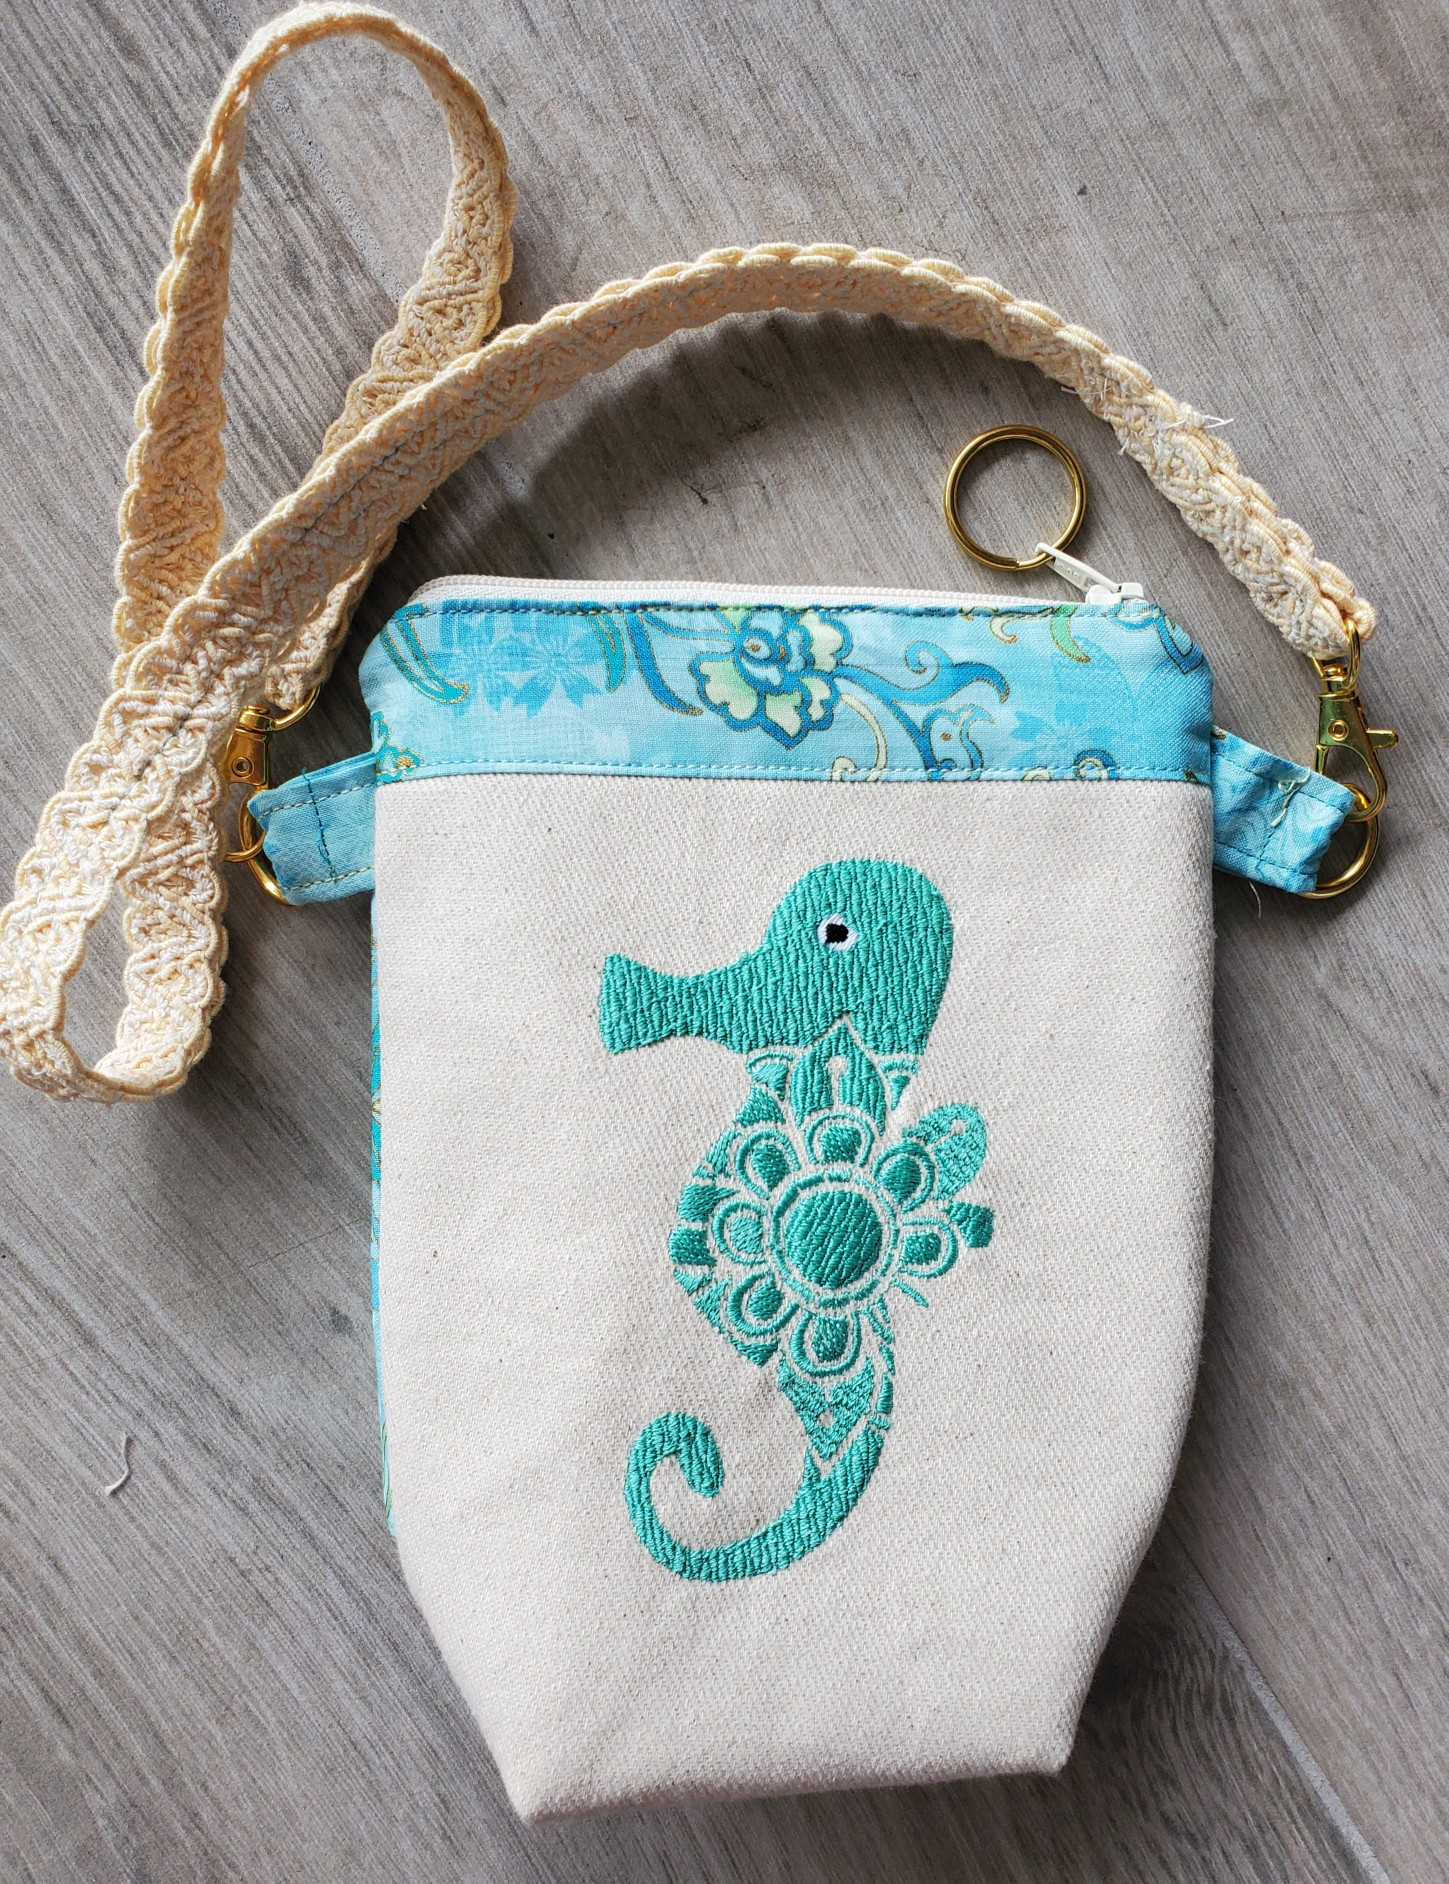 seahorse-phone-zipper-bag-zentangle-embroidery-artist Jennifer-Wheatley